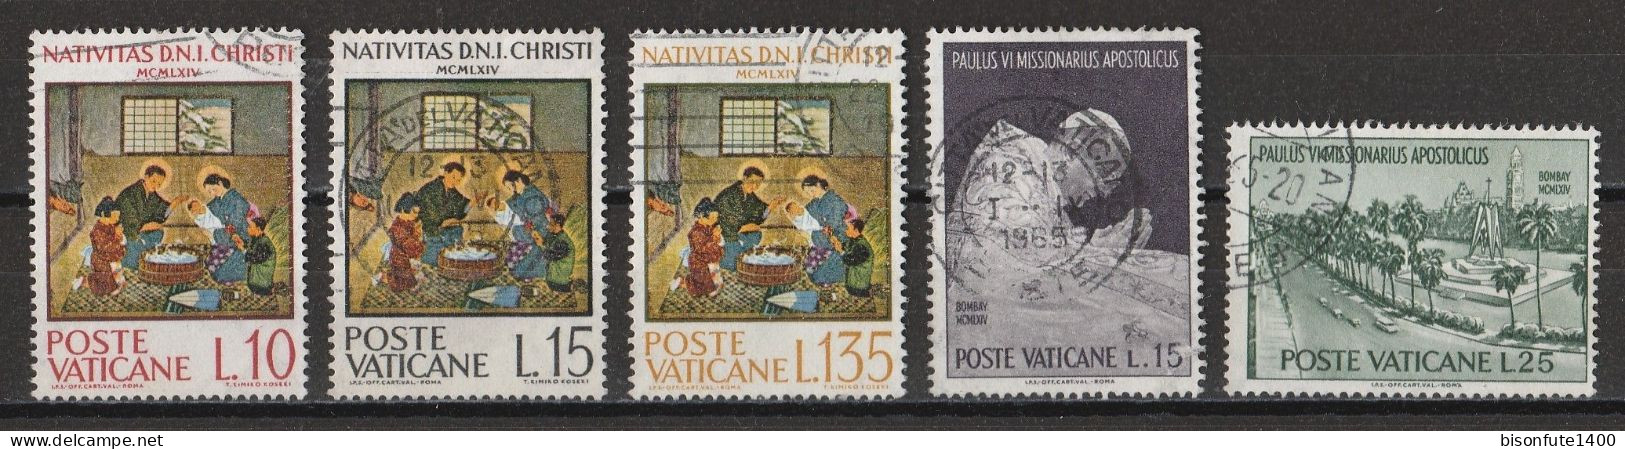 Vatican 1964 : Timbres Yvert & Tellier N° 415 - 416 - 417 - 418 - 419 - 420 Et 421 Oblitérés. - Gebraucht